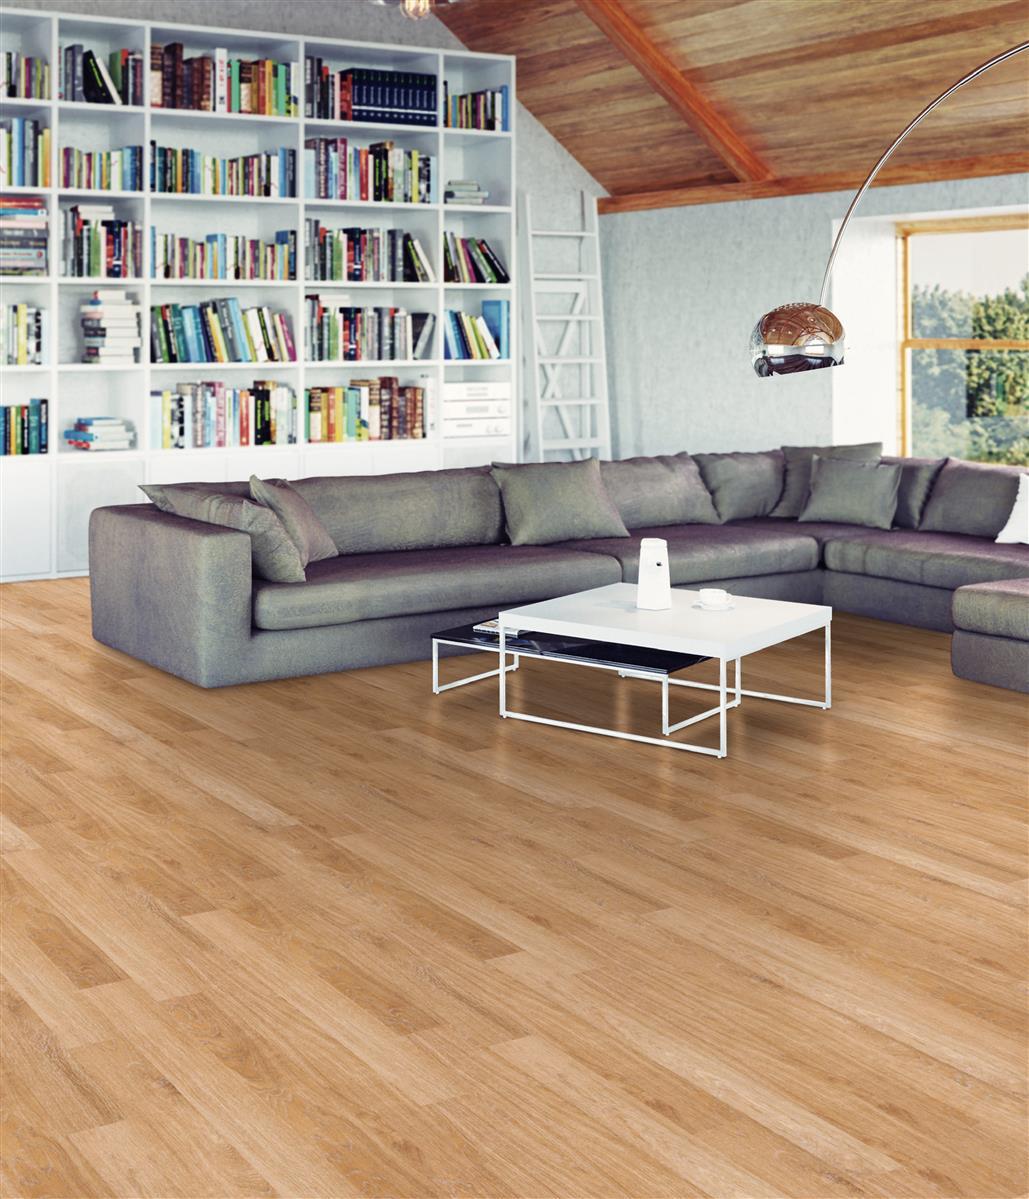 Klebevinyl Project Floors | floors@home/20 | PW 1633